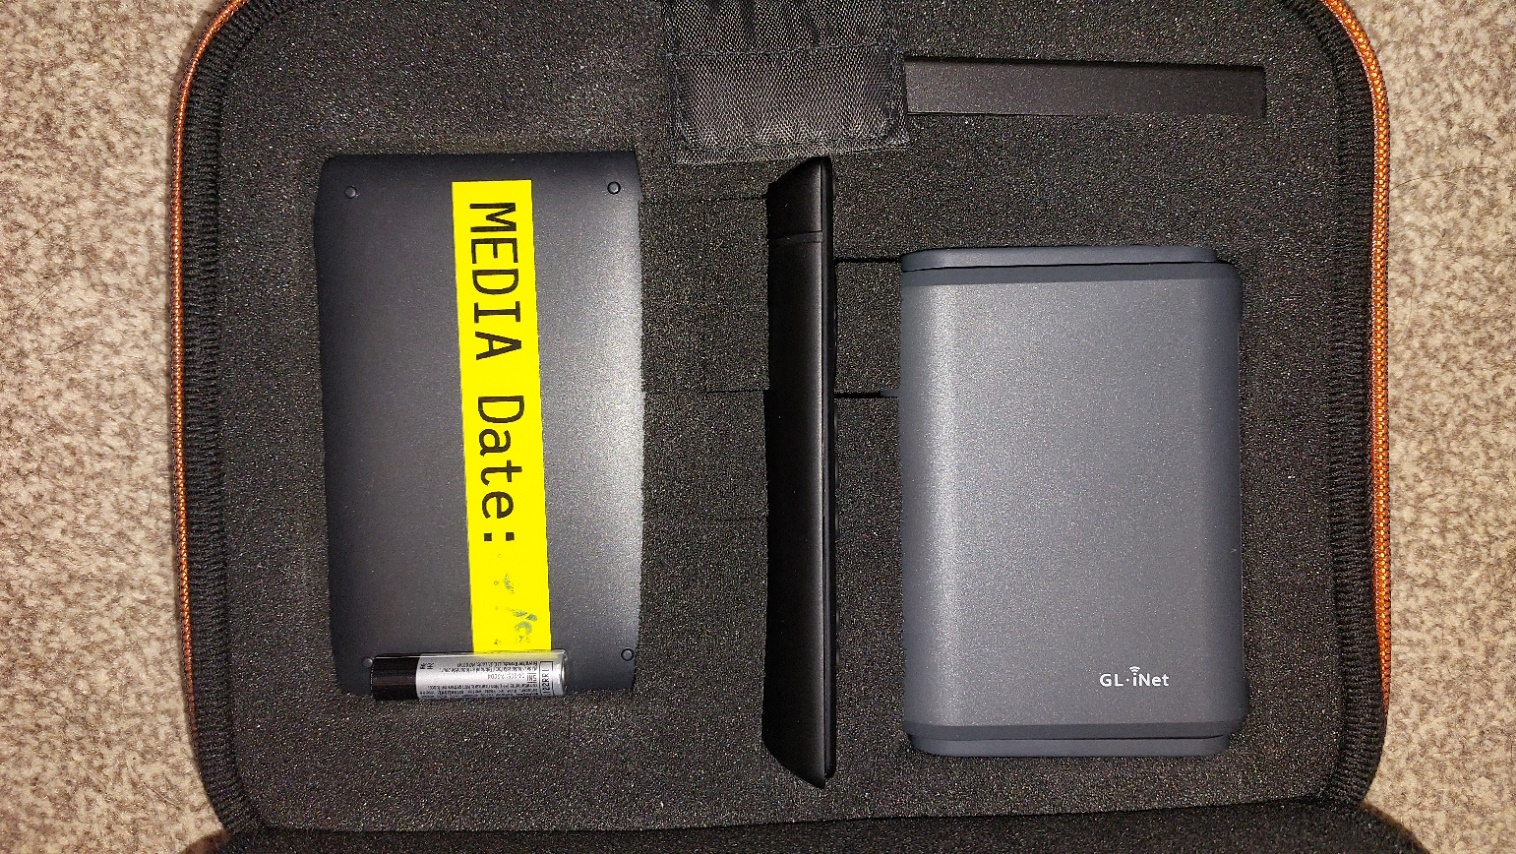 GL.inet Slate Plus, USB hard drive and firestick in case